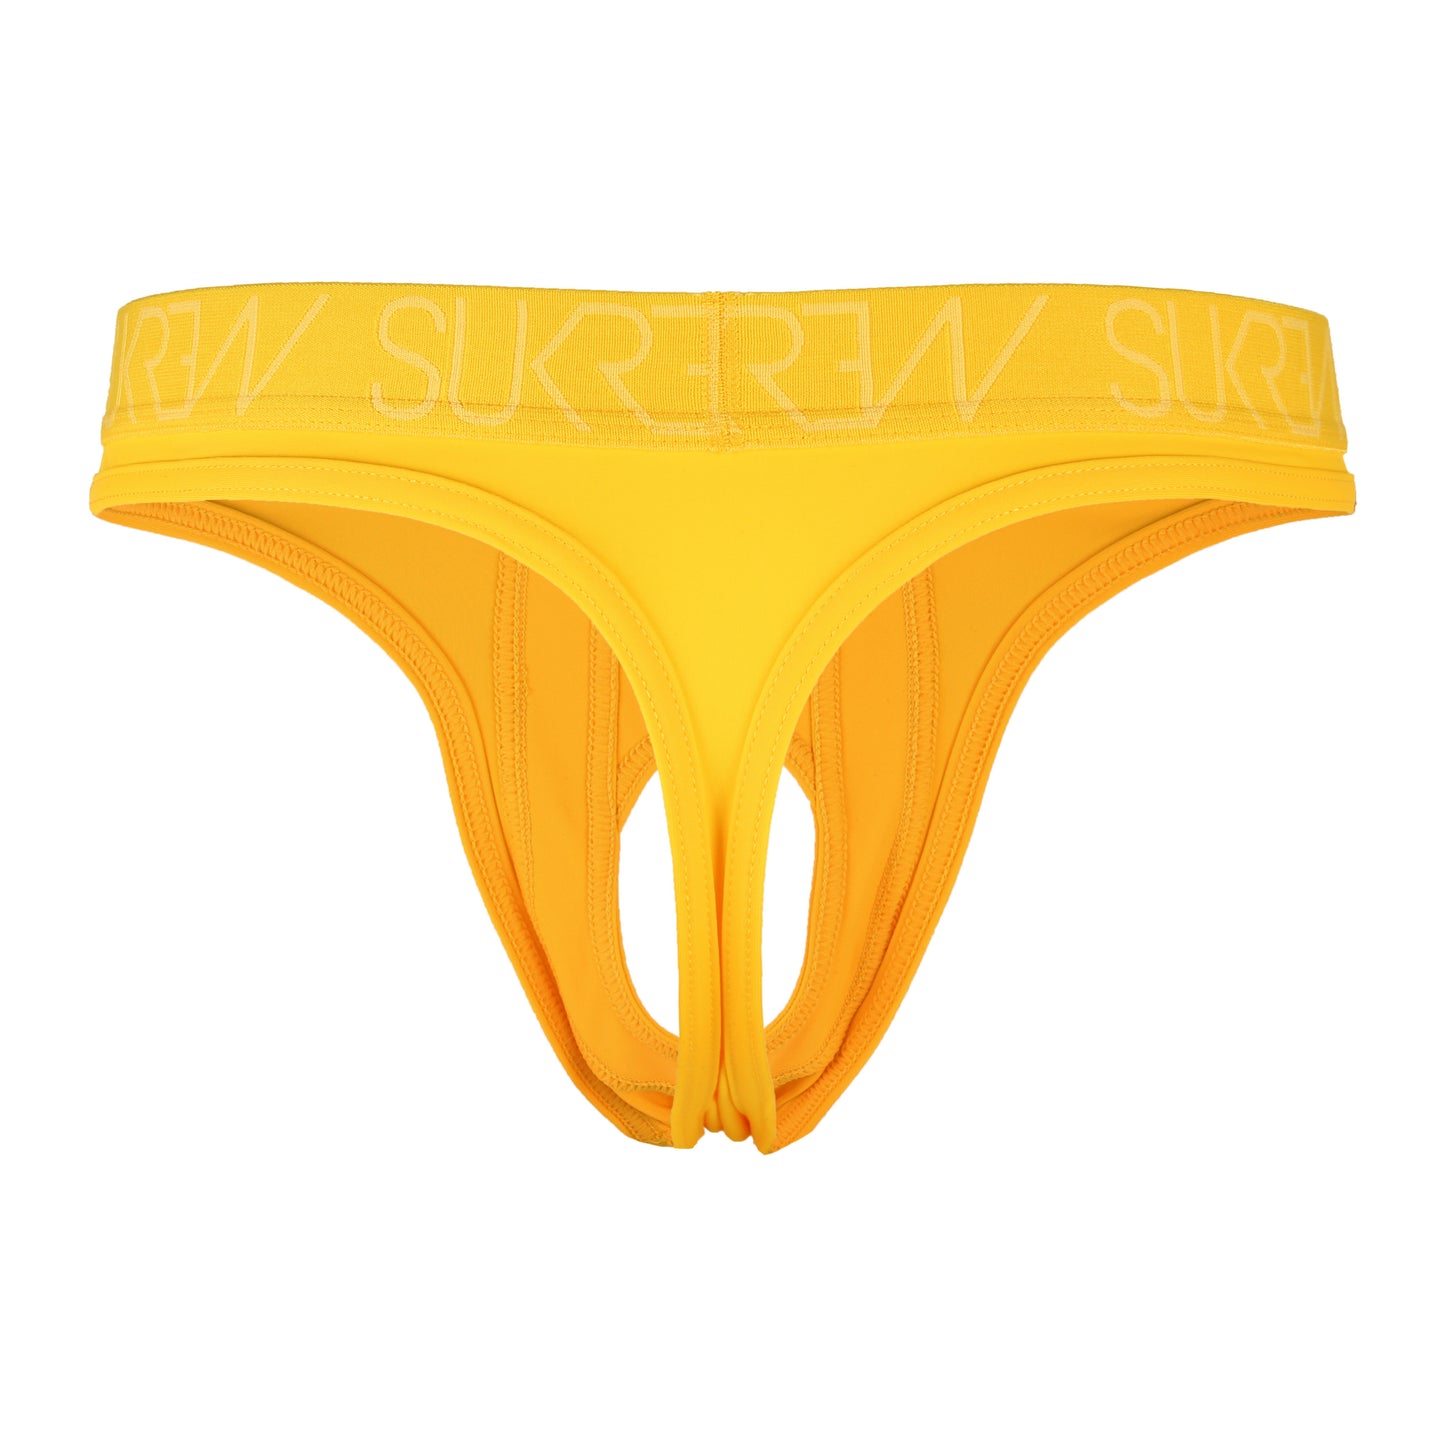 Sukrew - U-Style Thong - Yellow - Large